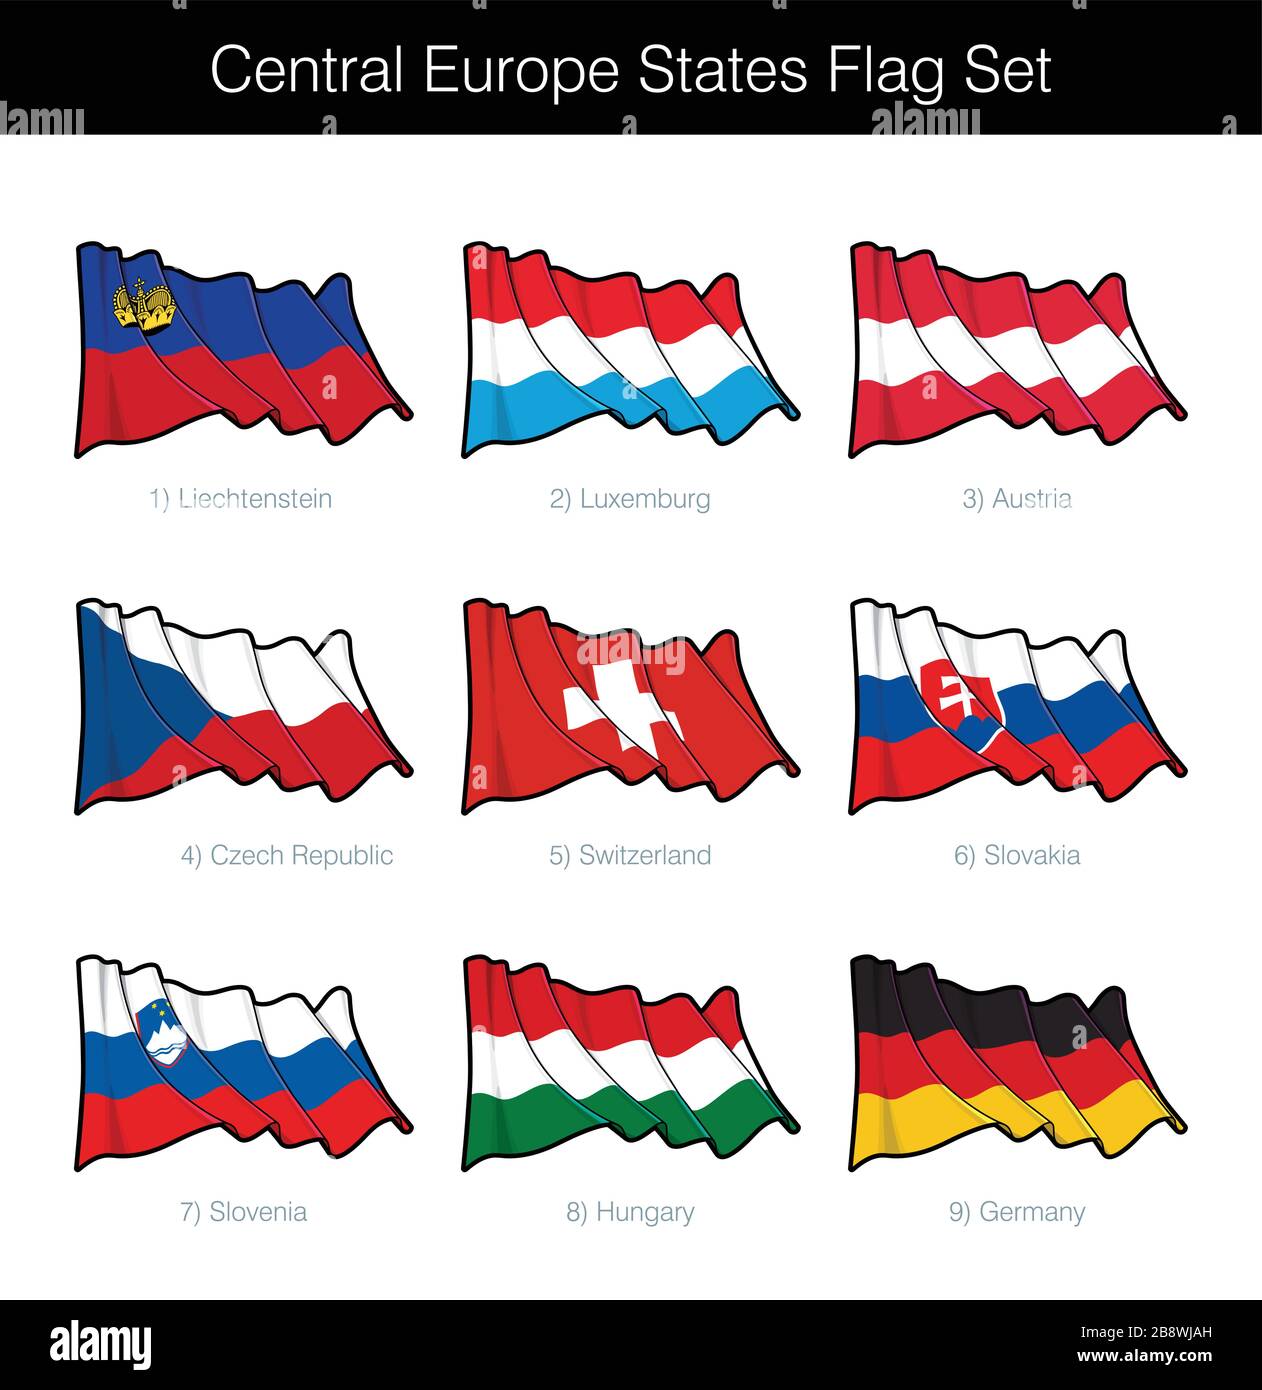 Central Europe States Waving Flag Set. The set includes the flags of Liechtenstein, Luxemburg, Austria, Czechia, Switzerland, Slovakia, Slovenia, Hung Stock Vector